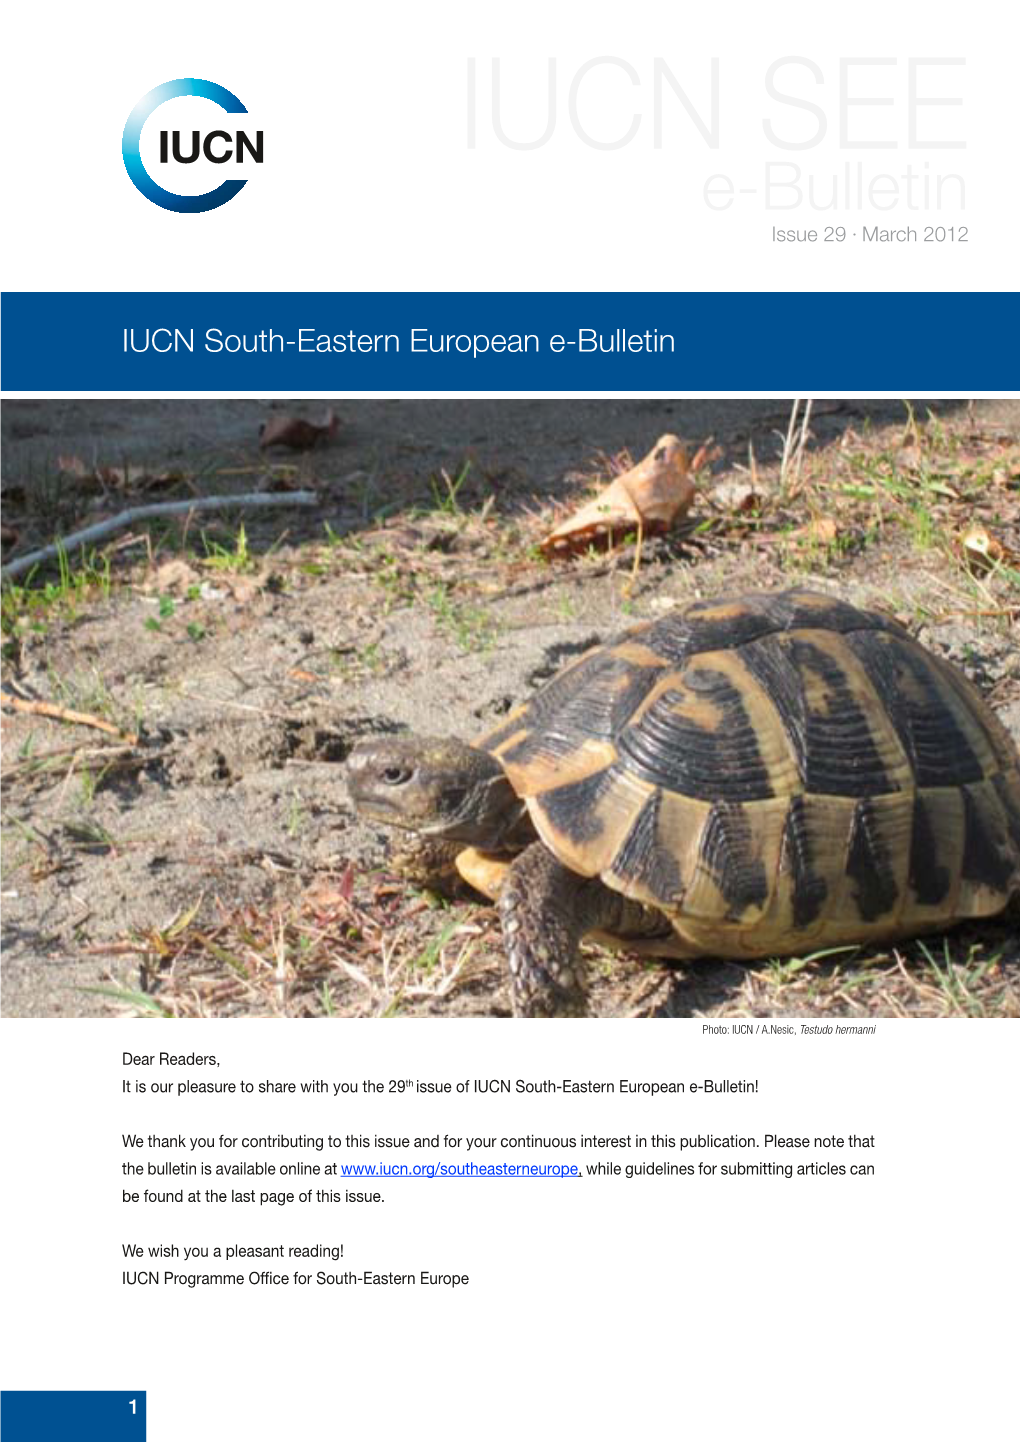 IUCN South-Eastern European E-Bulletin 29